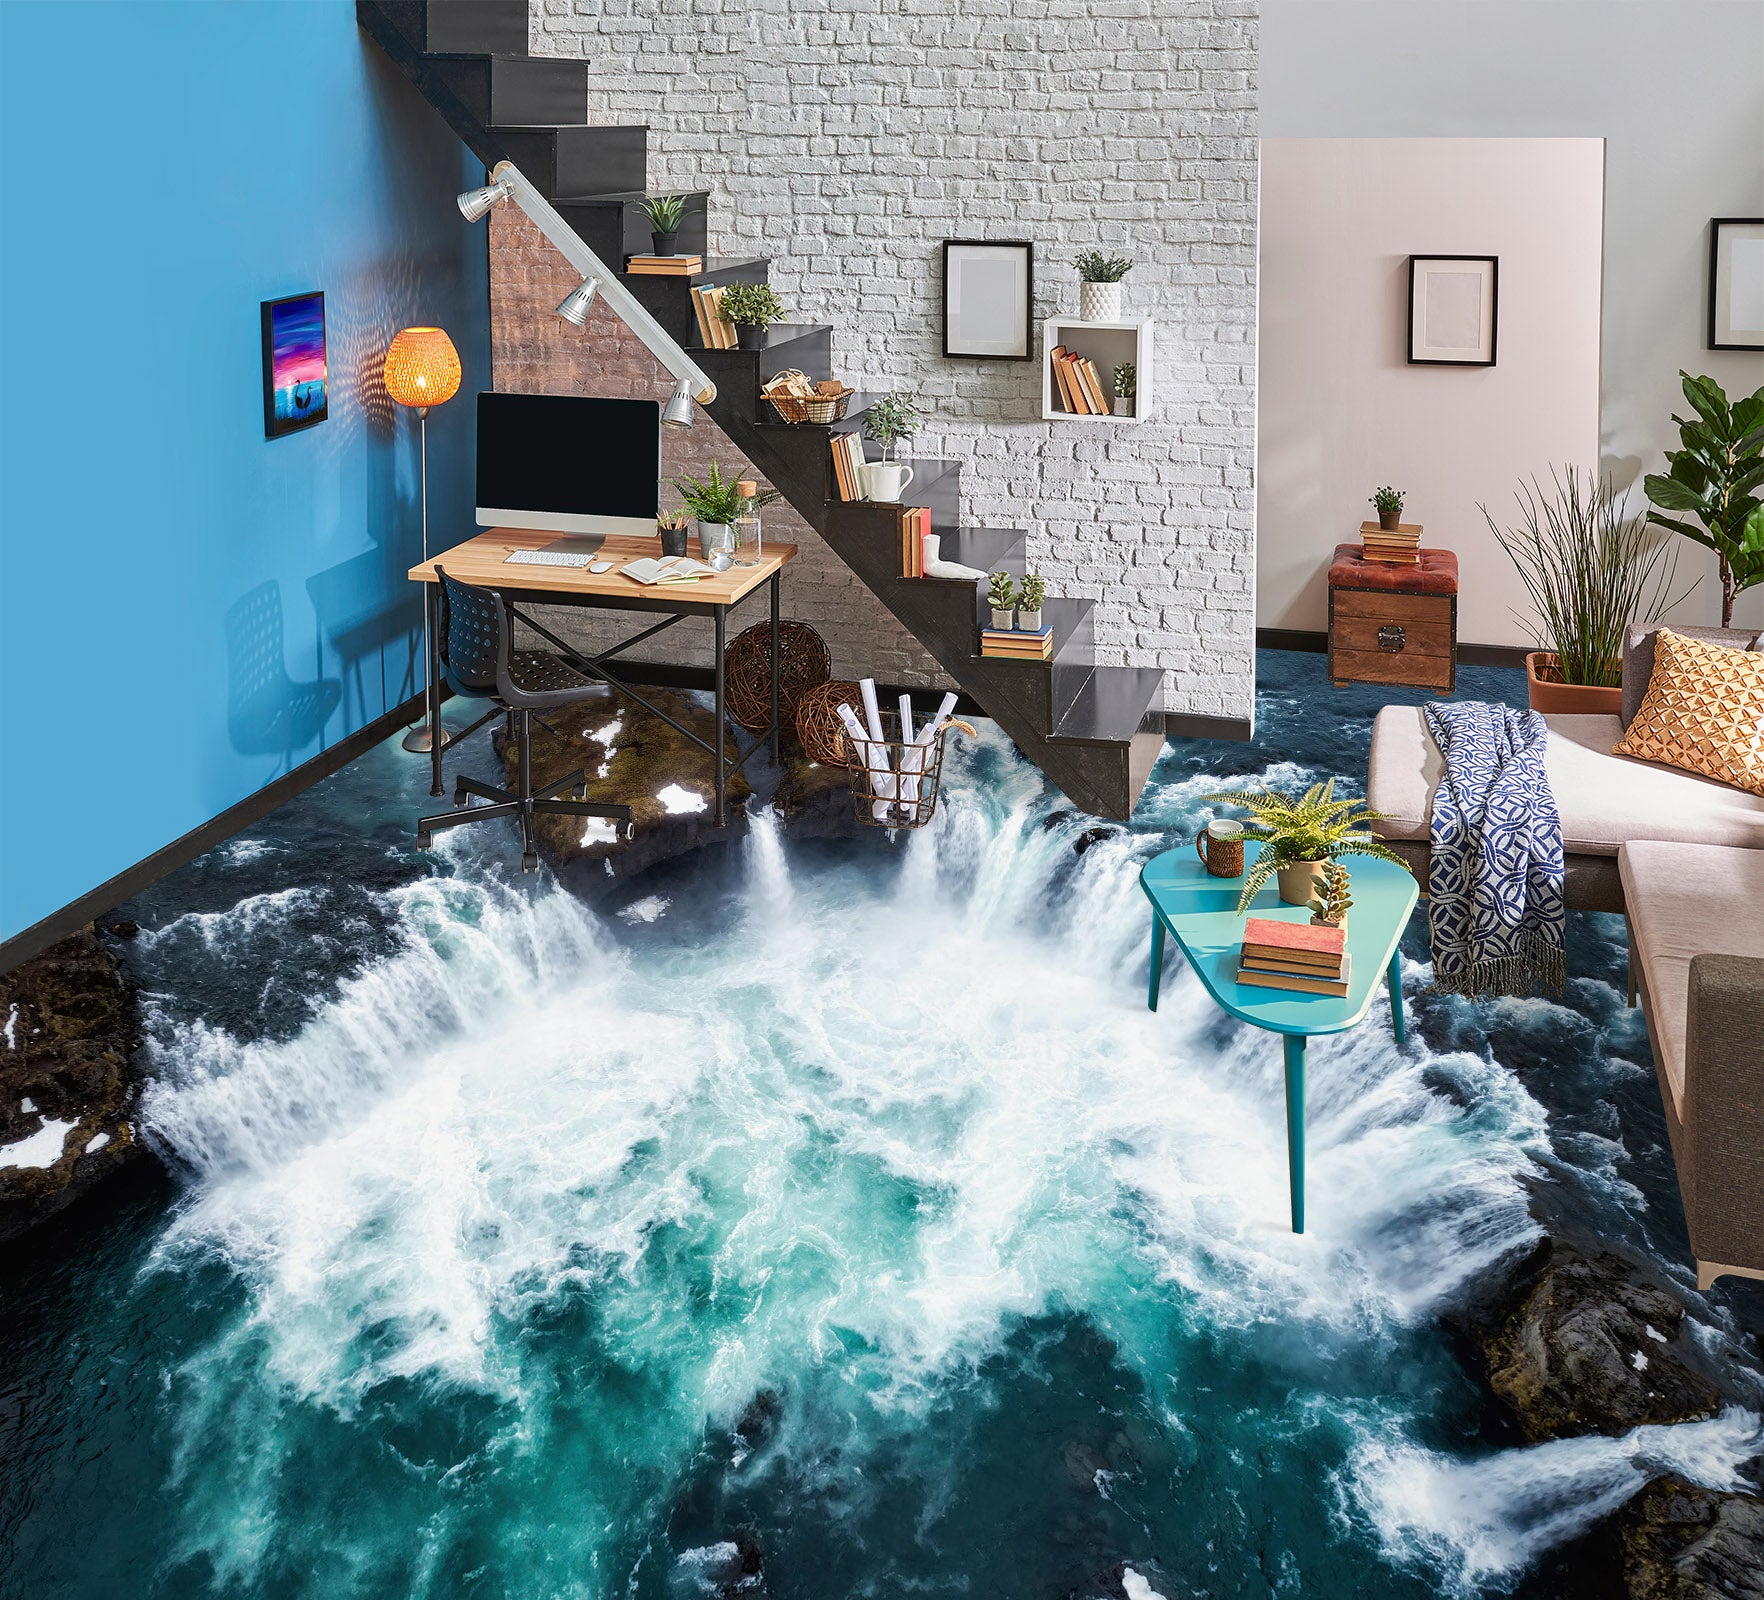 3D Fierce And Galloping Lake 354 Floor Mural  Wallpaper Murals Rug & Mat Print Epoxy waterproof bath floor